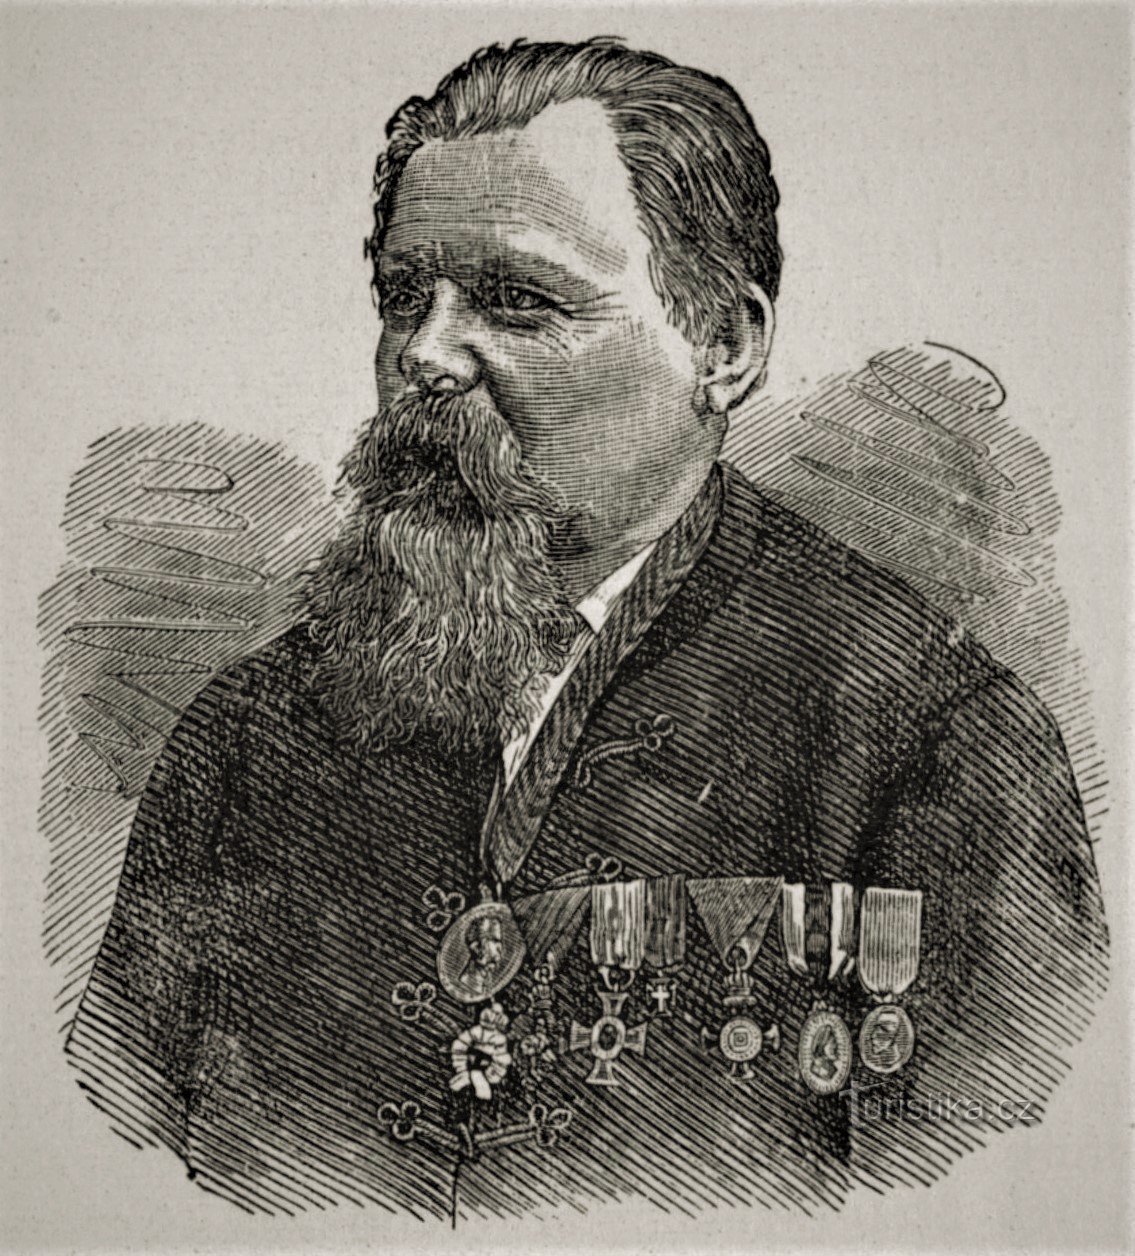 Tehdastyöläinen Václav František Červený